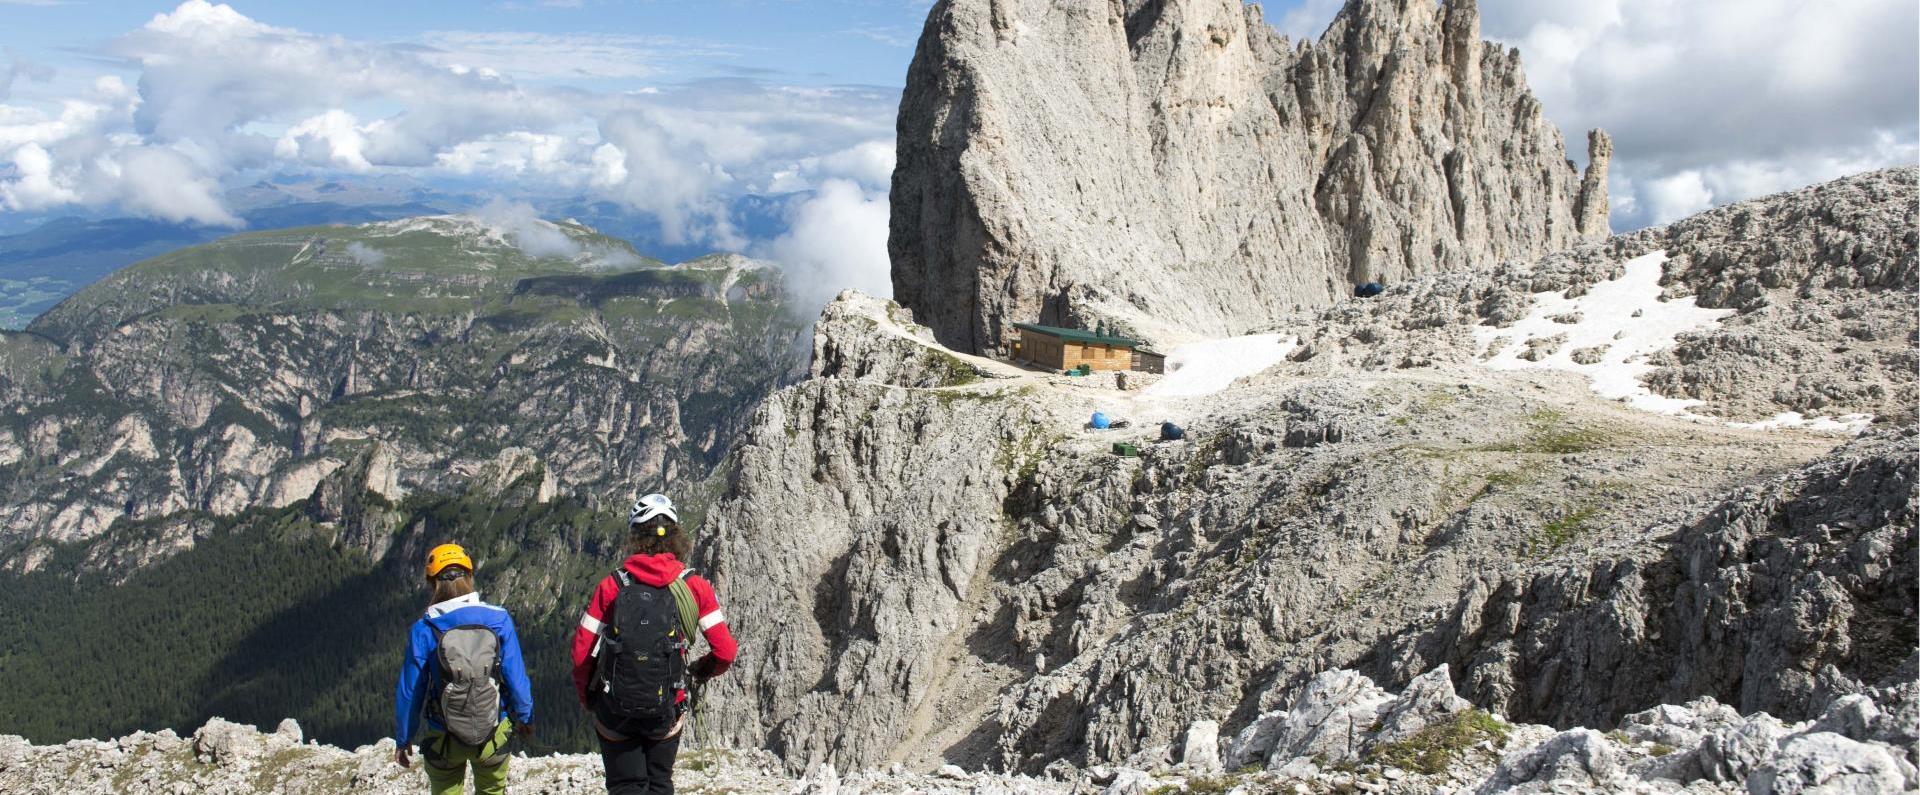 Climbing tours around the Rosengarten massif in the Dolomites